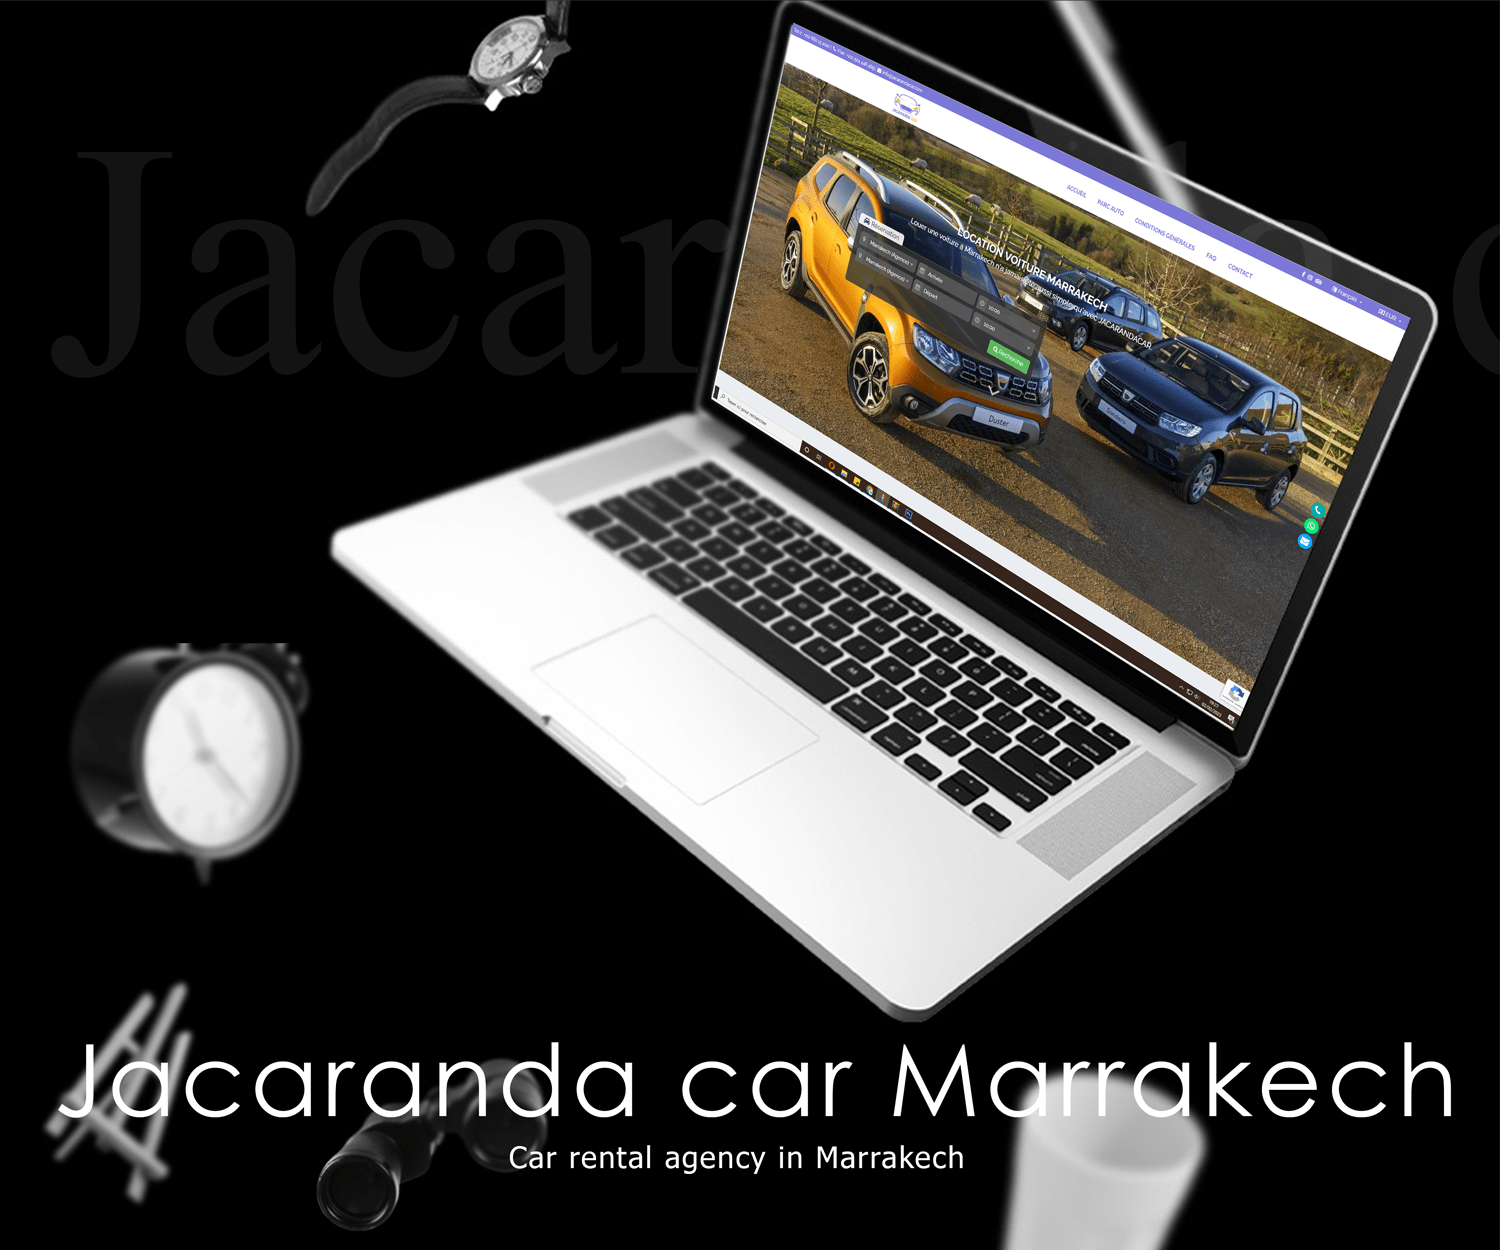 Jacarandacar car rental agency in Marrakech